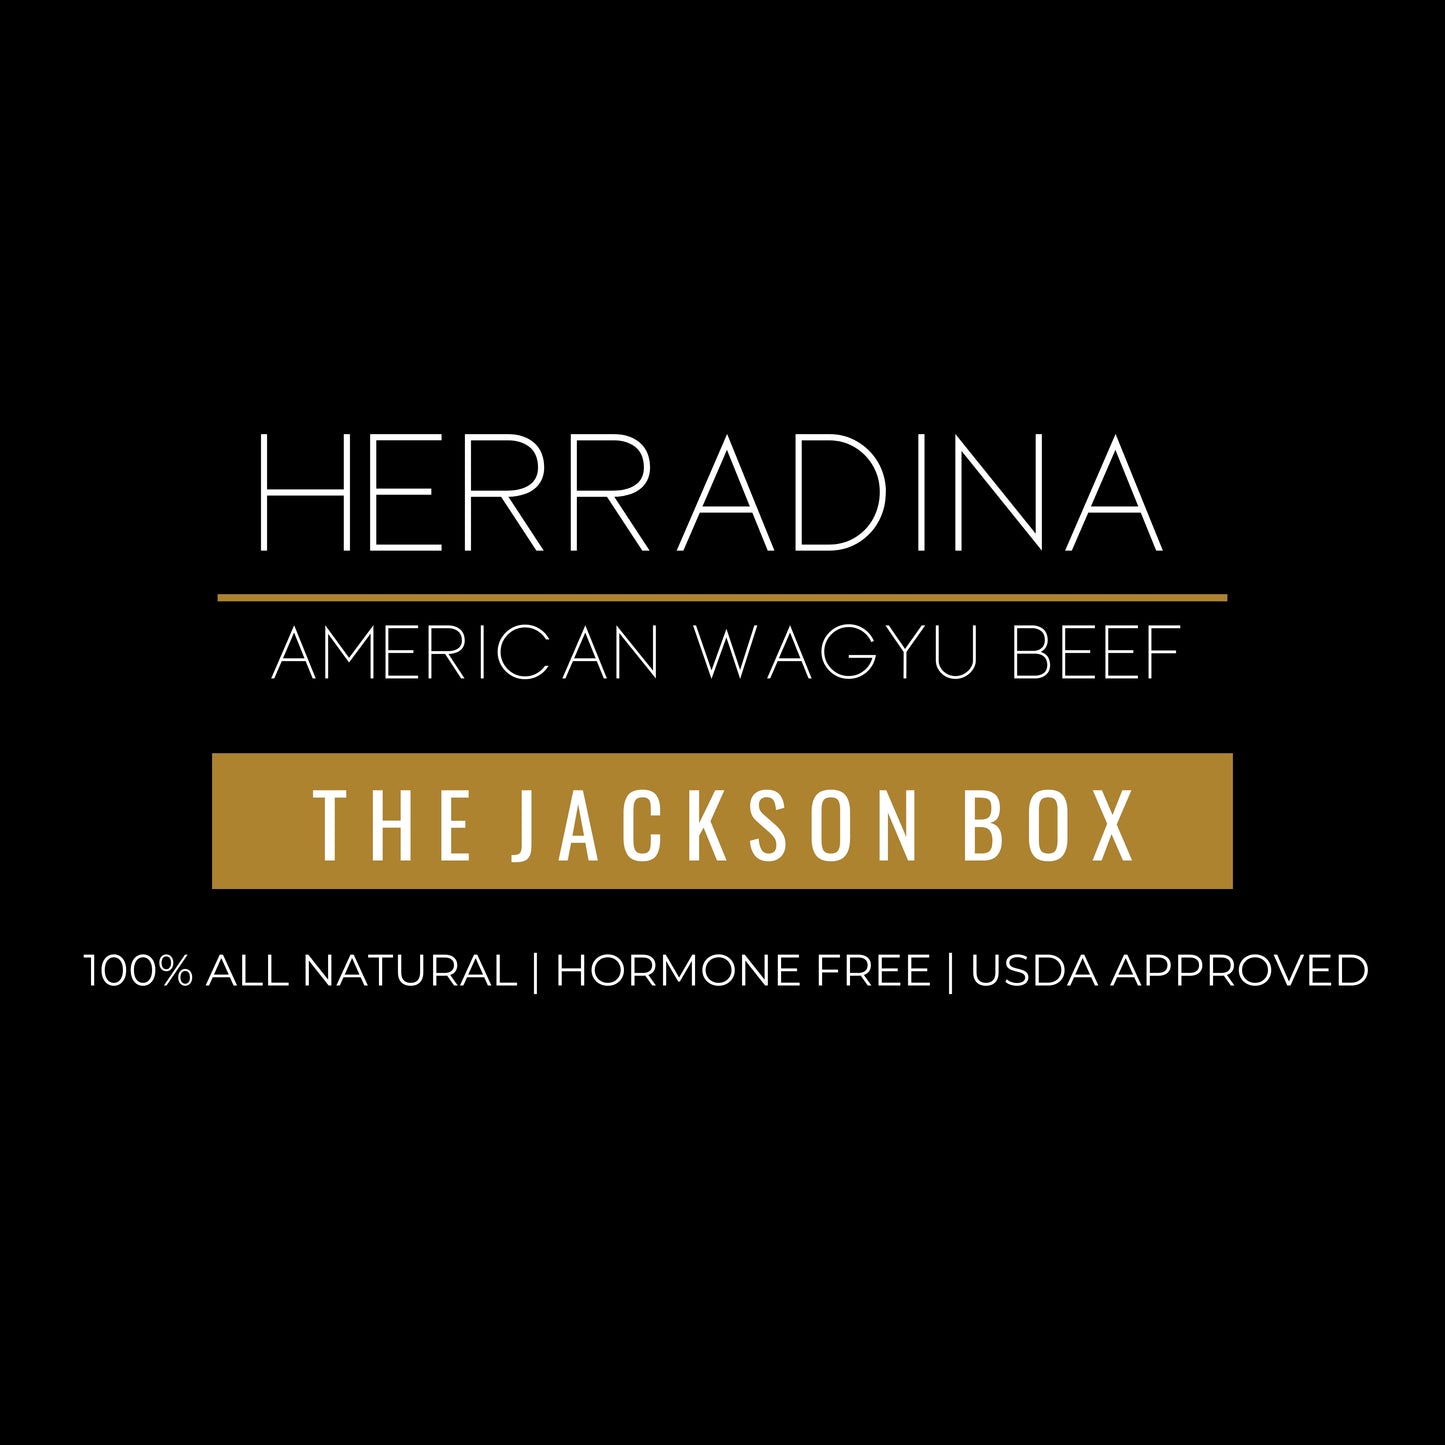 THE JACKSON BOX